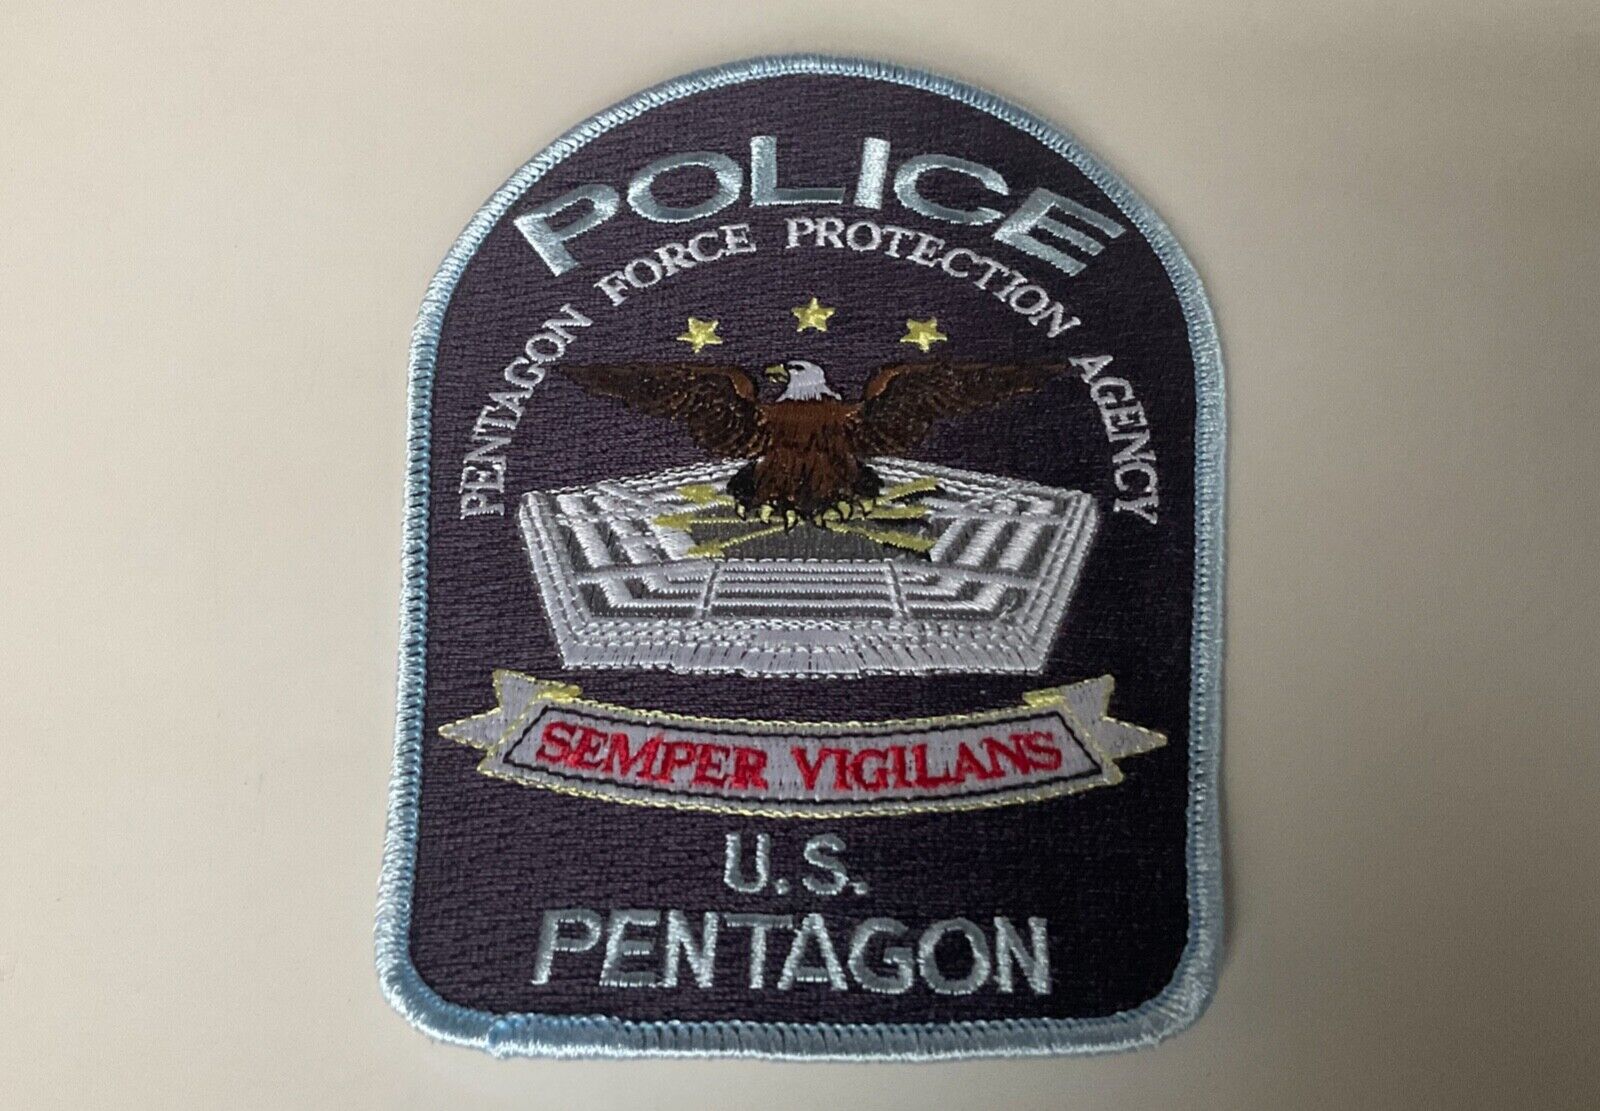 POLICE PENTAGON FORCE PROTECTION AGENCY U.S. PENTAGON PATCH